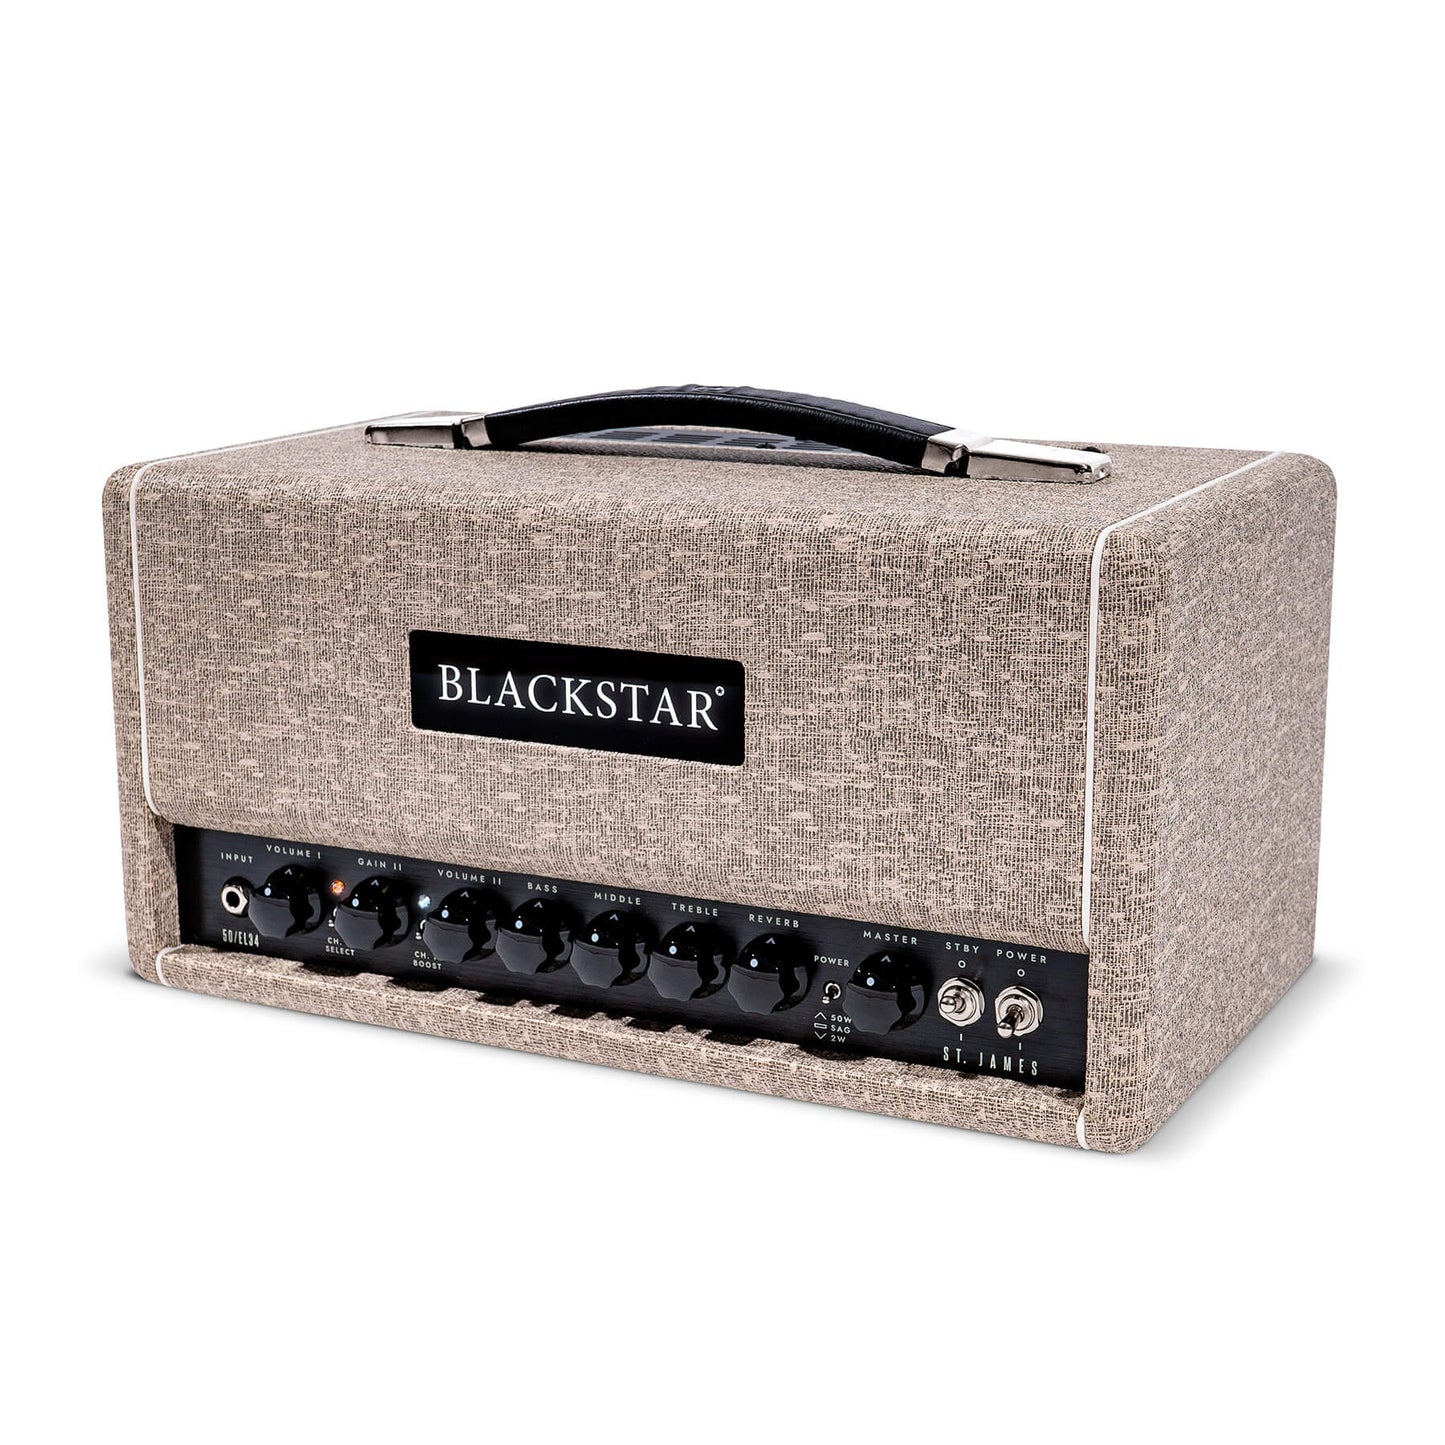 Blackstar ST. JAMES 50 EL34 HEAD Guitar Valve Amplifier - Fawn (Each)